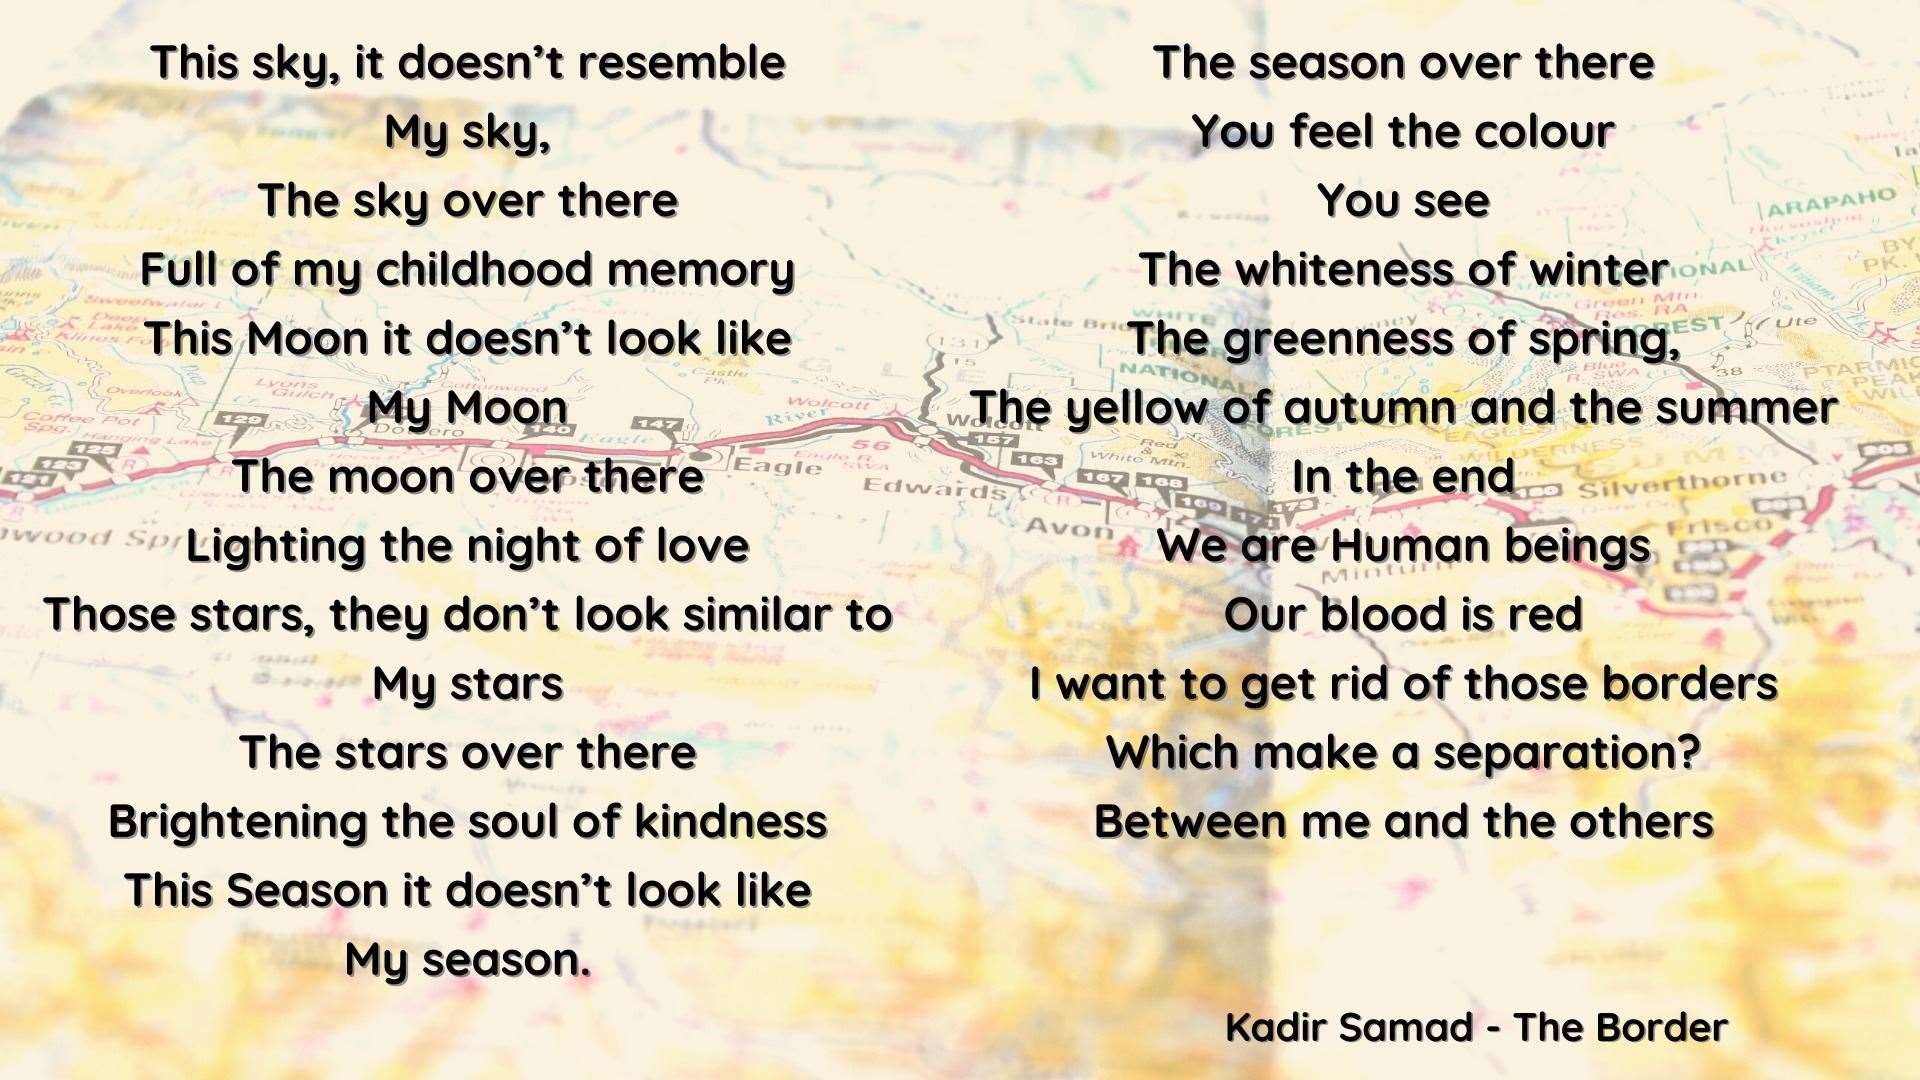 One of Kadir's poems